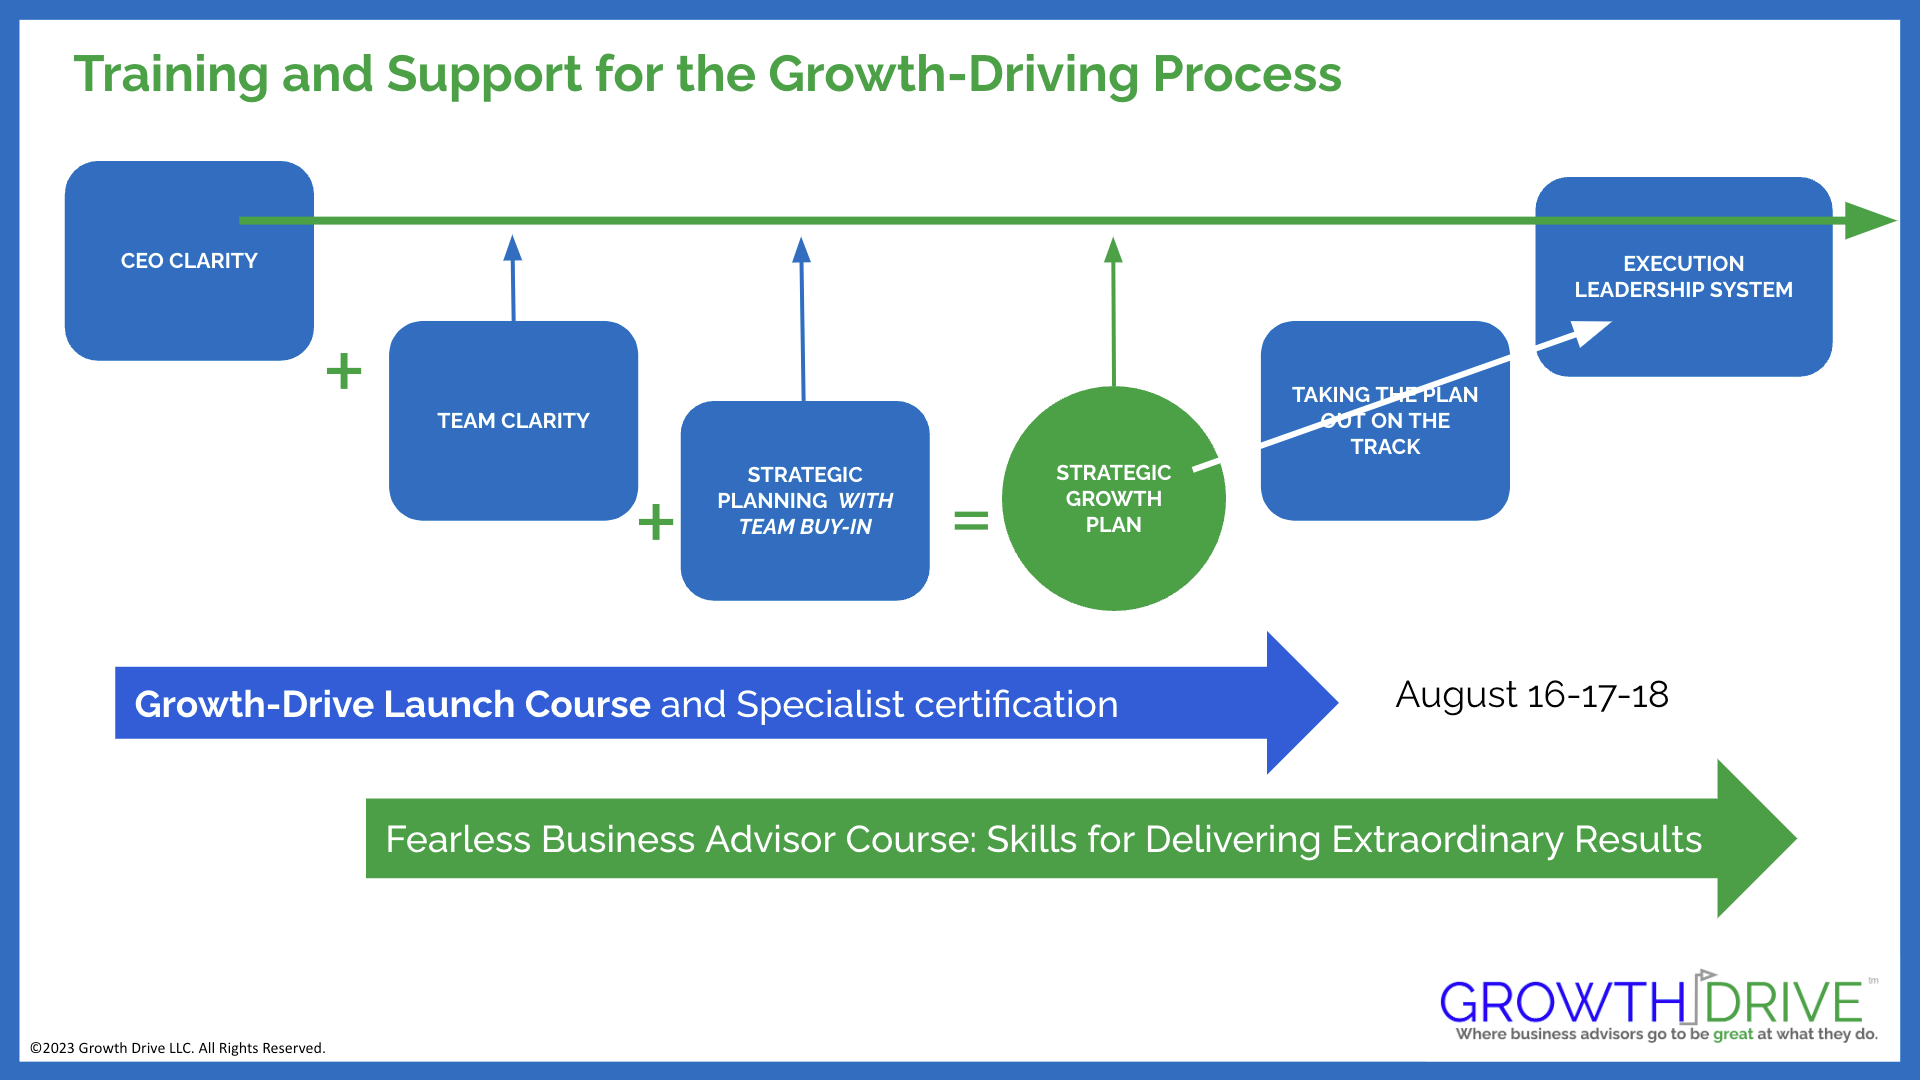 Growth-Drive Process Training